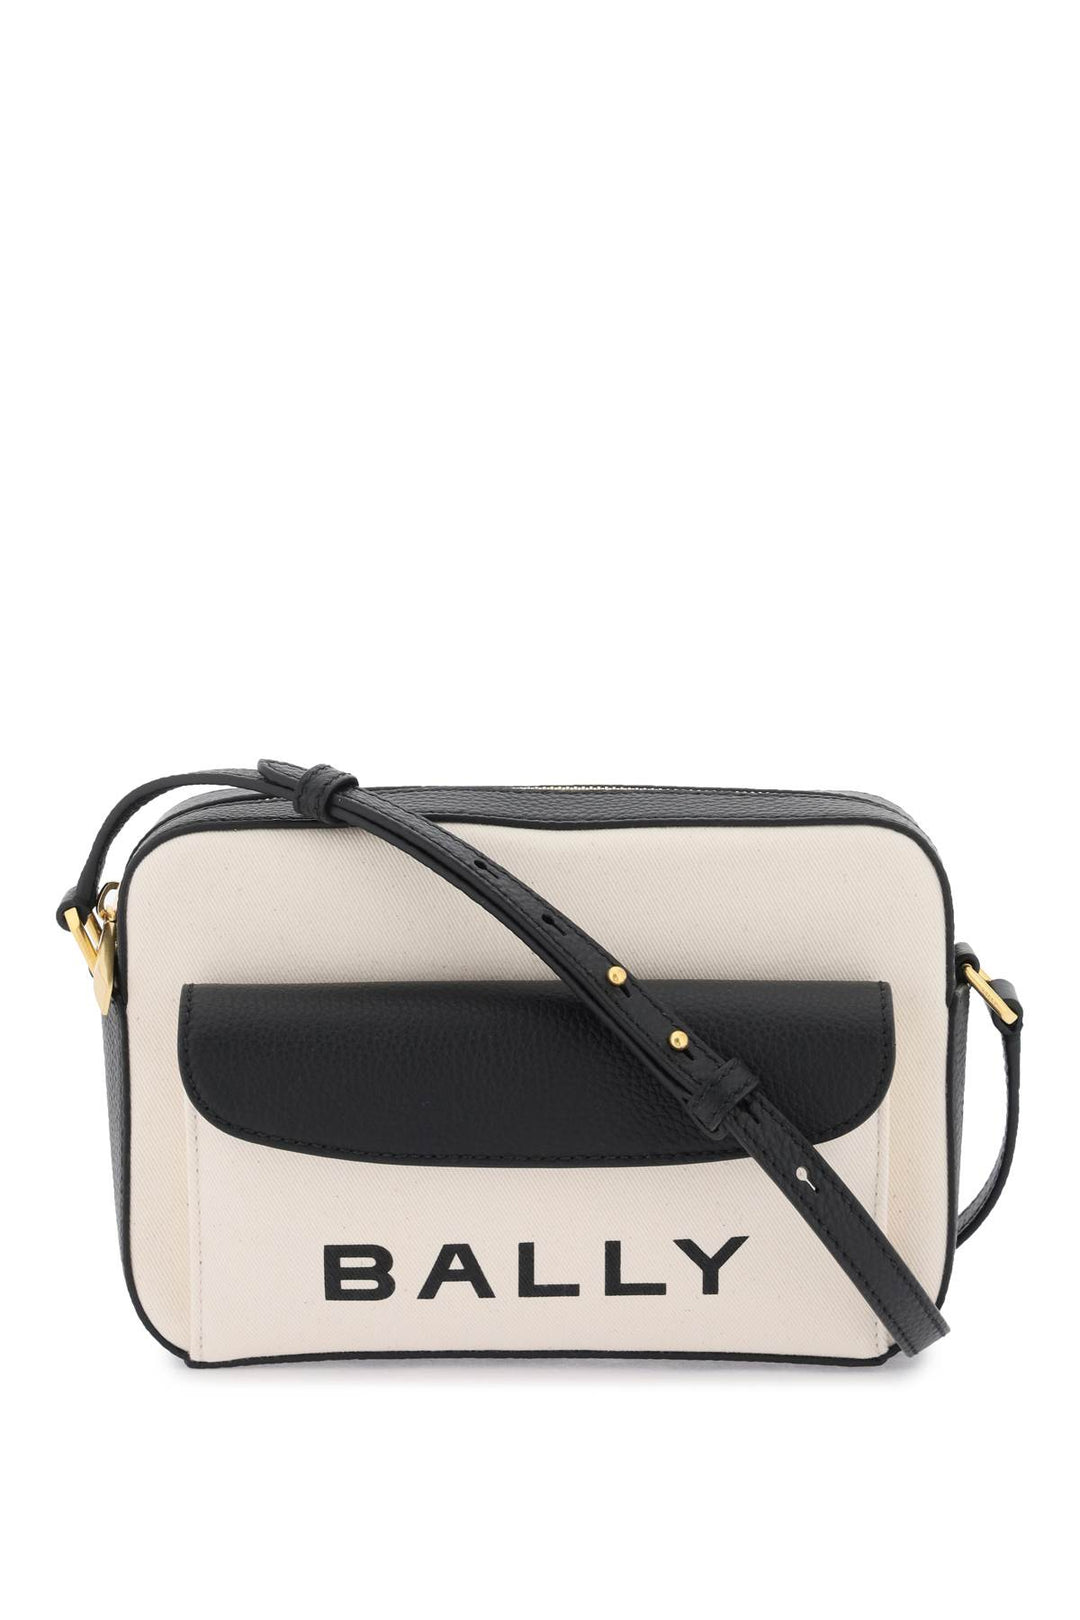 Bally 'Bar' Crossbody Bag   Bianco